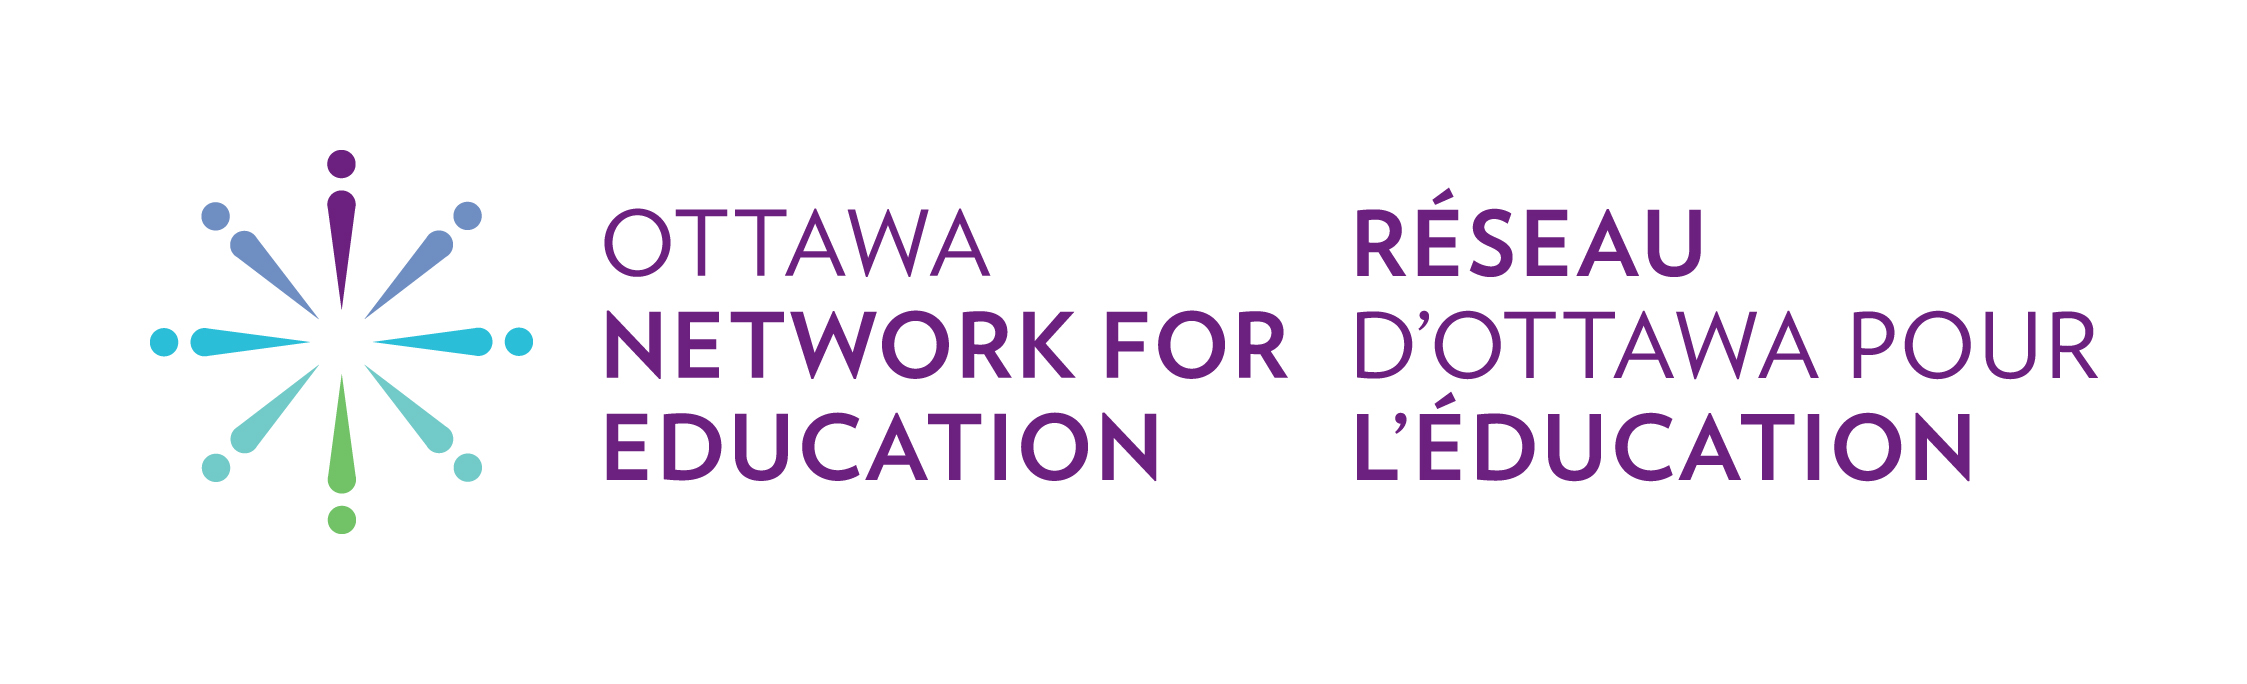 Ottawa Network for Education